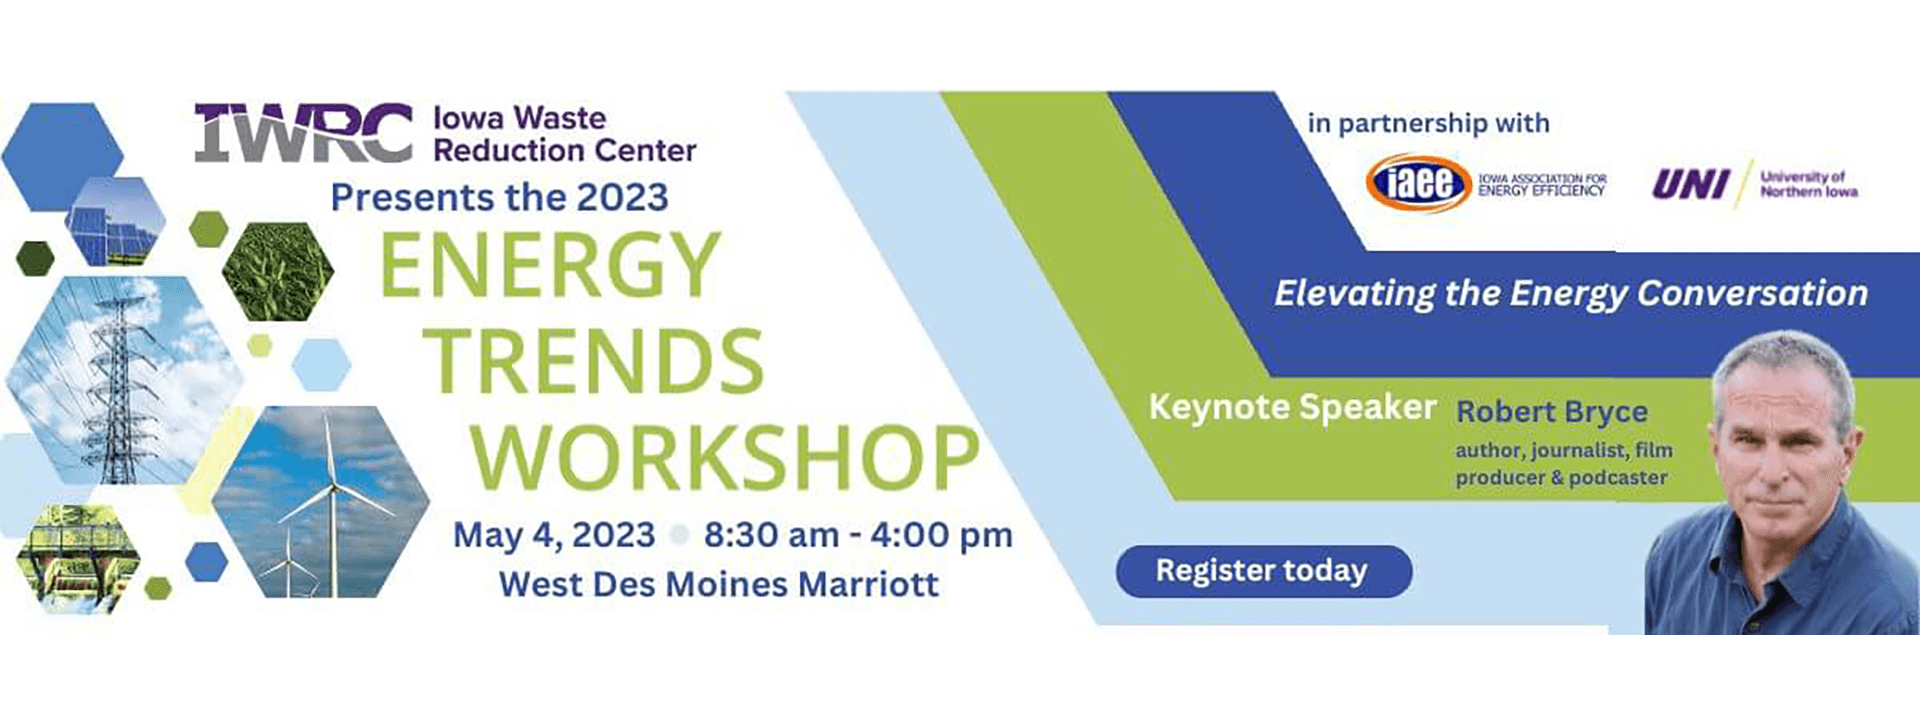 2023 Energy Trends Workshop